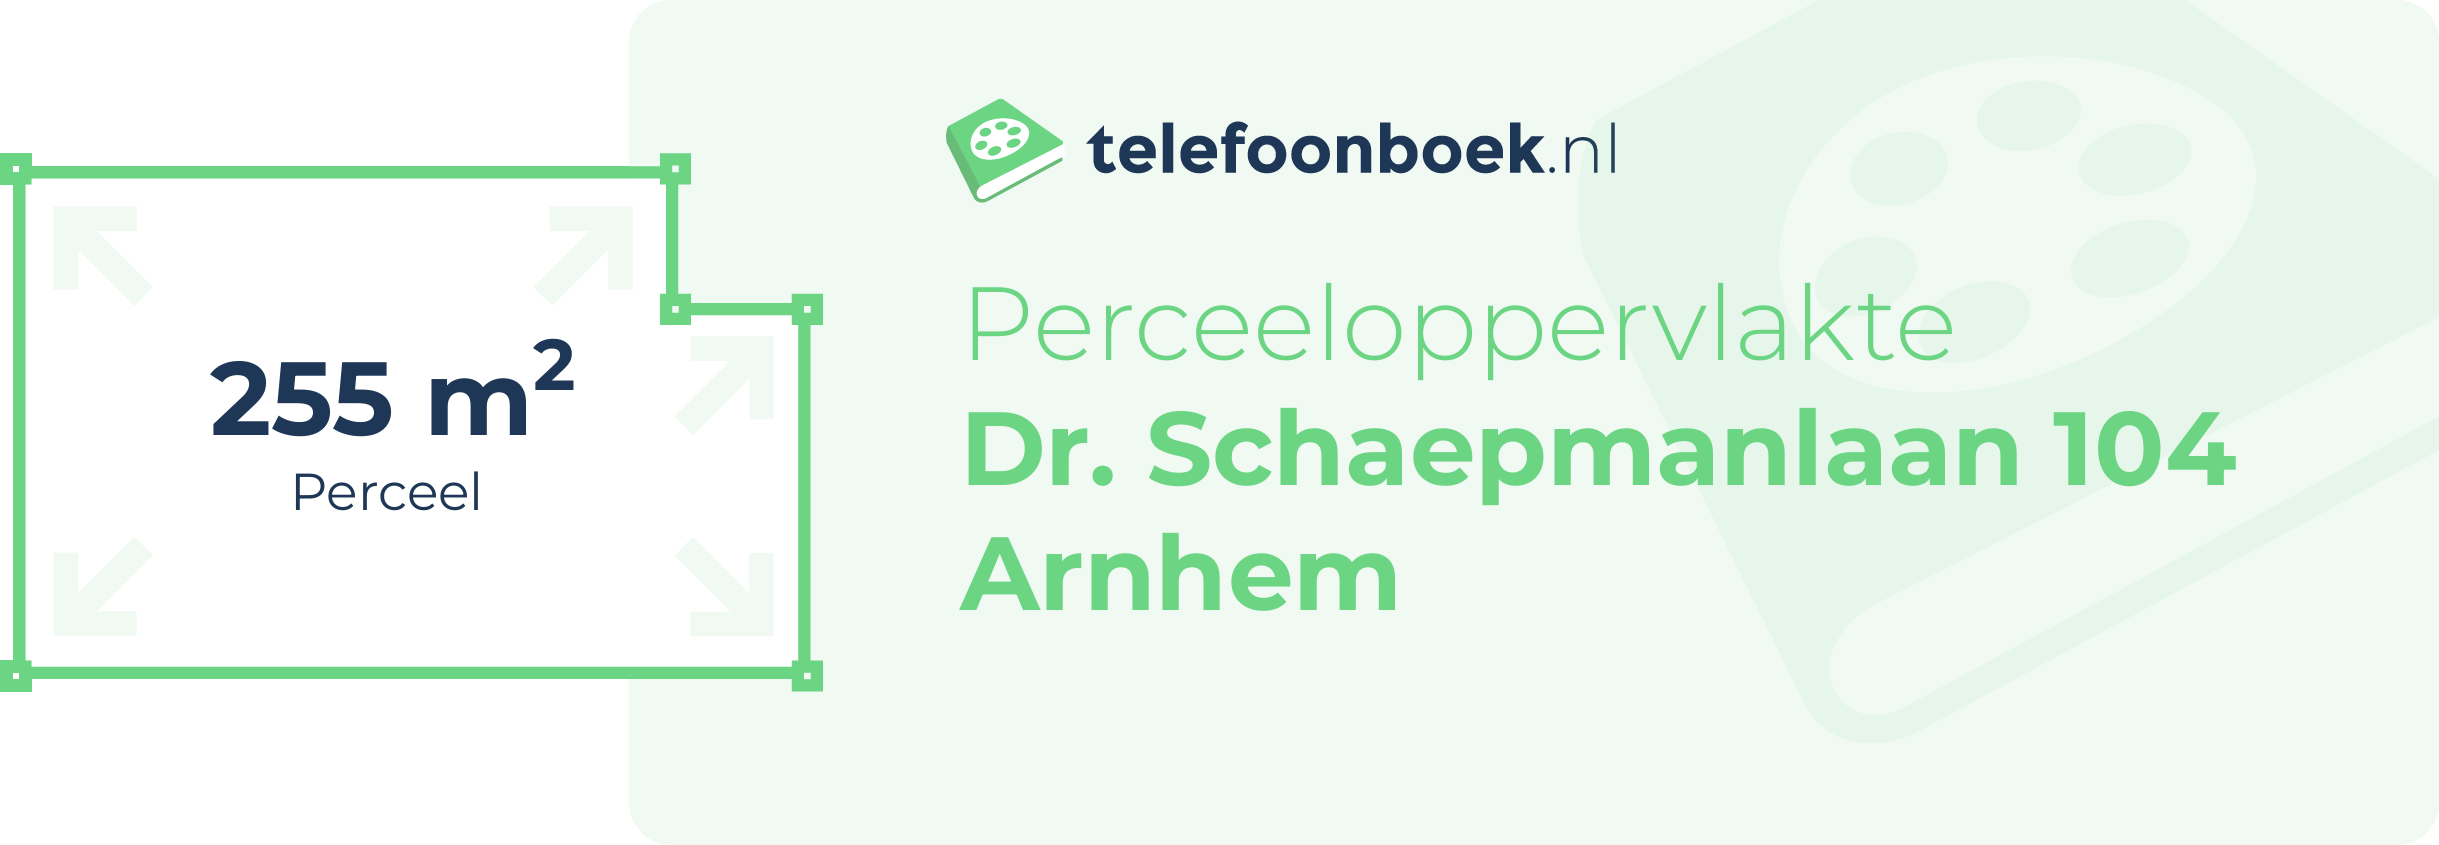 Perceeloppervlakte Dr. Schaepmanlaan 104 Arnhem